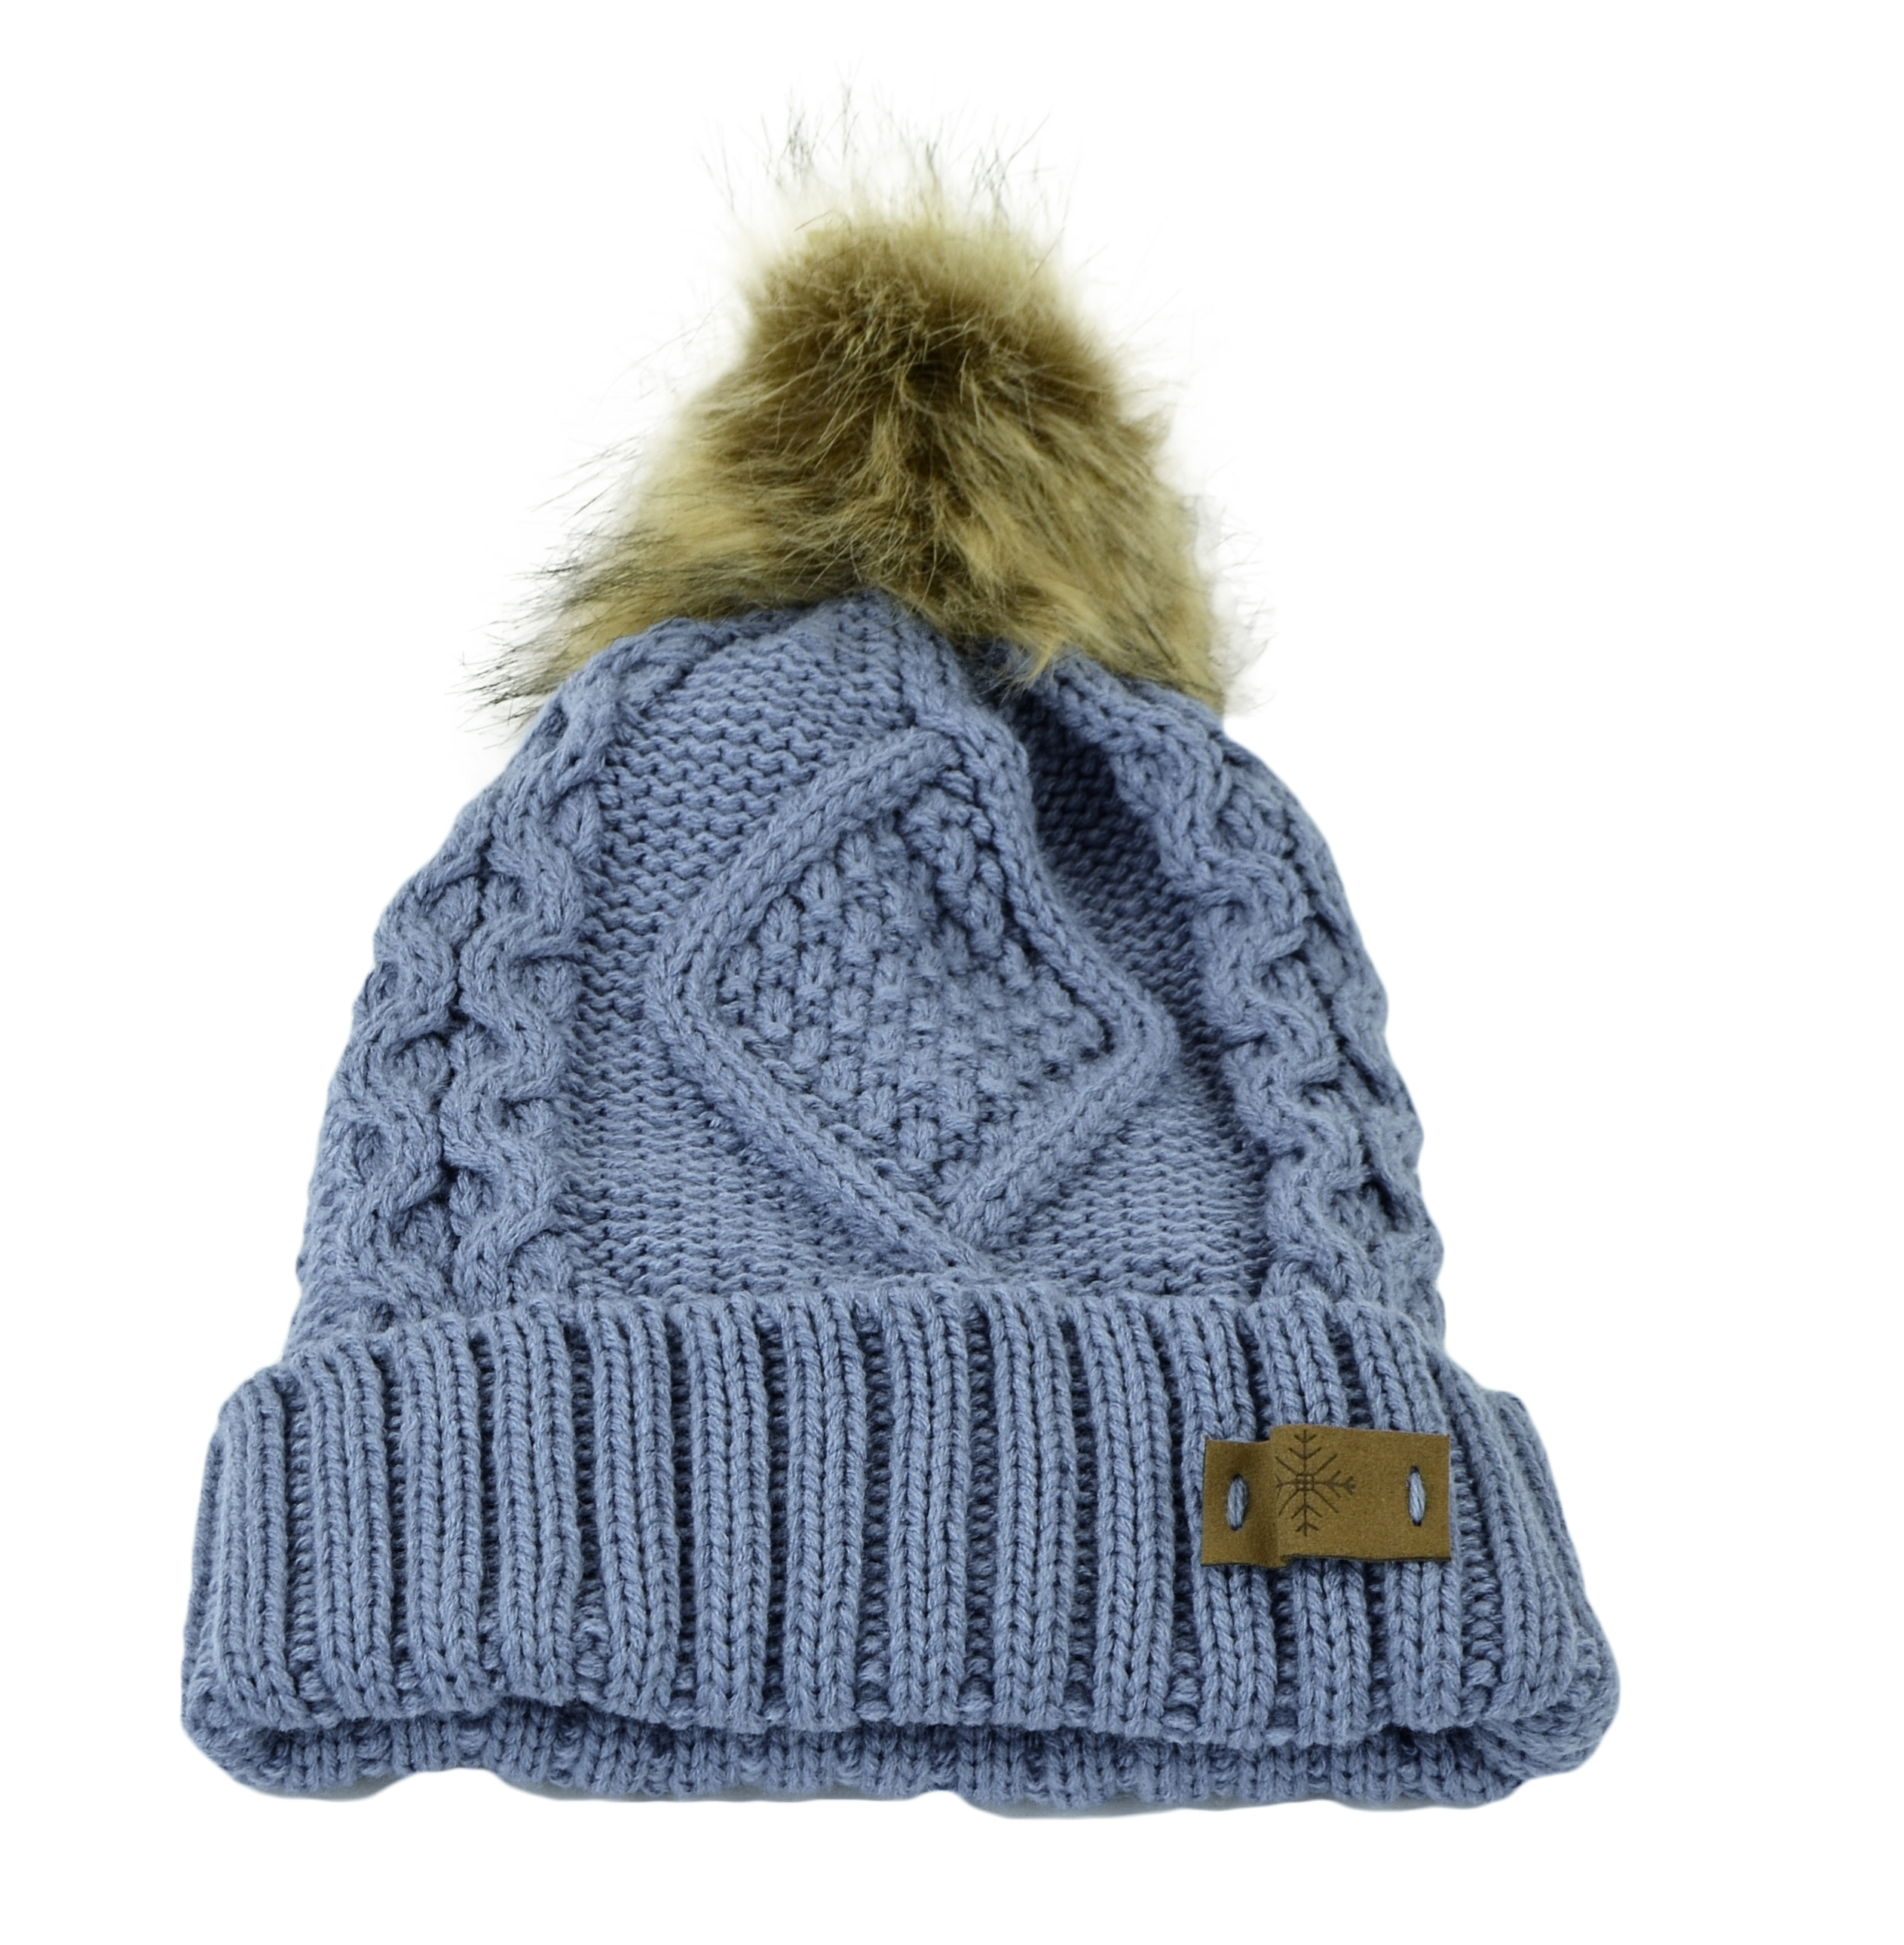 Belle Donne - Women's Winter Fleece Lined Cable Knitted Pom Pom Beanie Hat - INDI BLUE